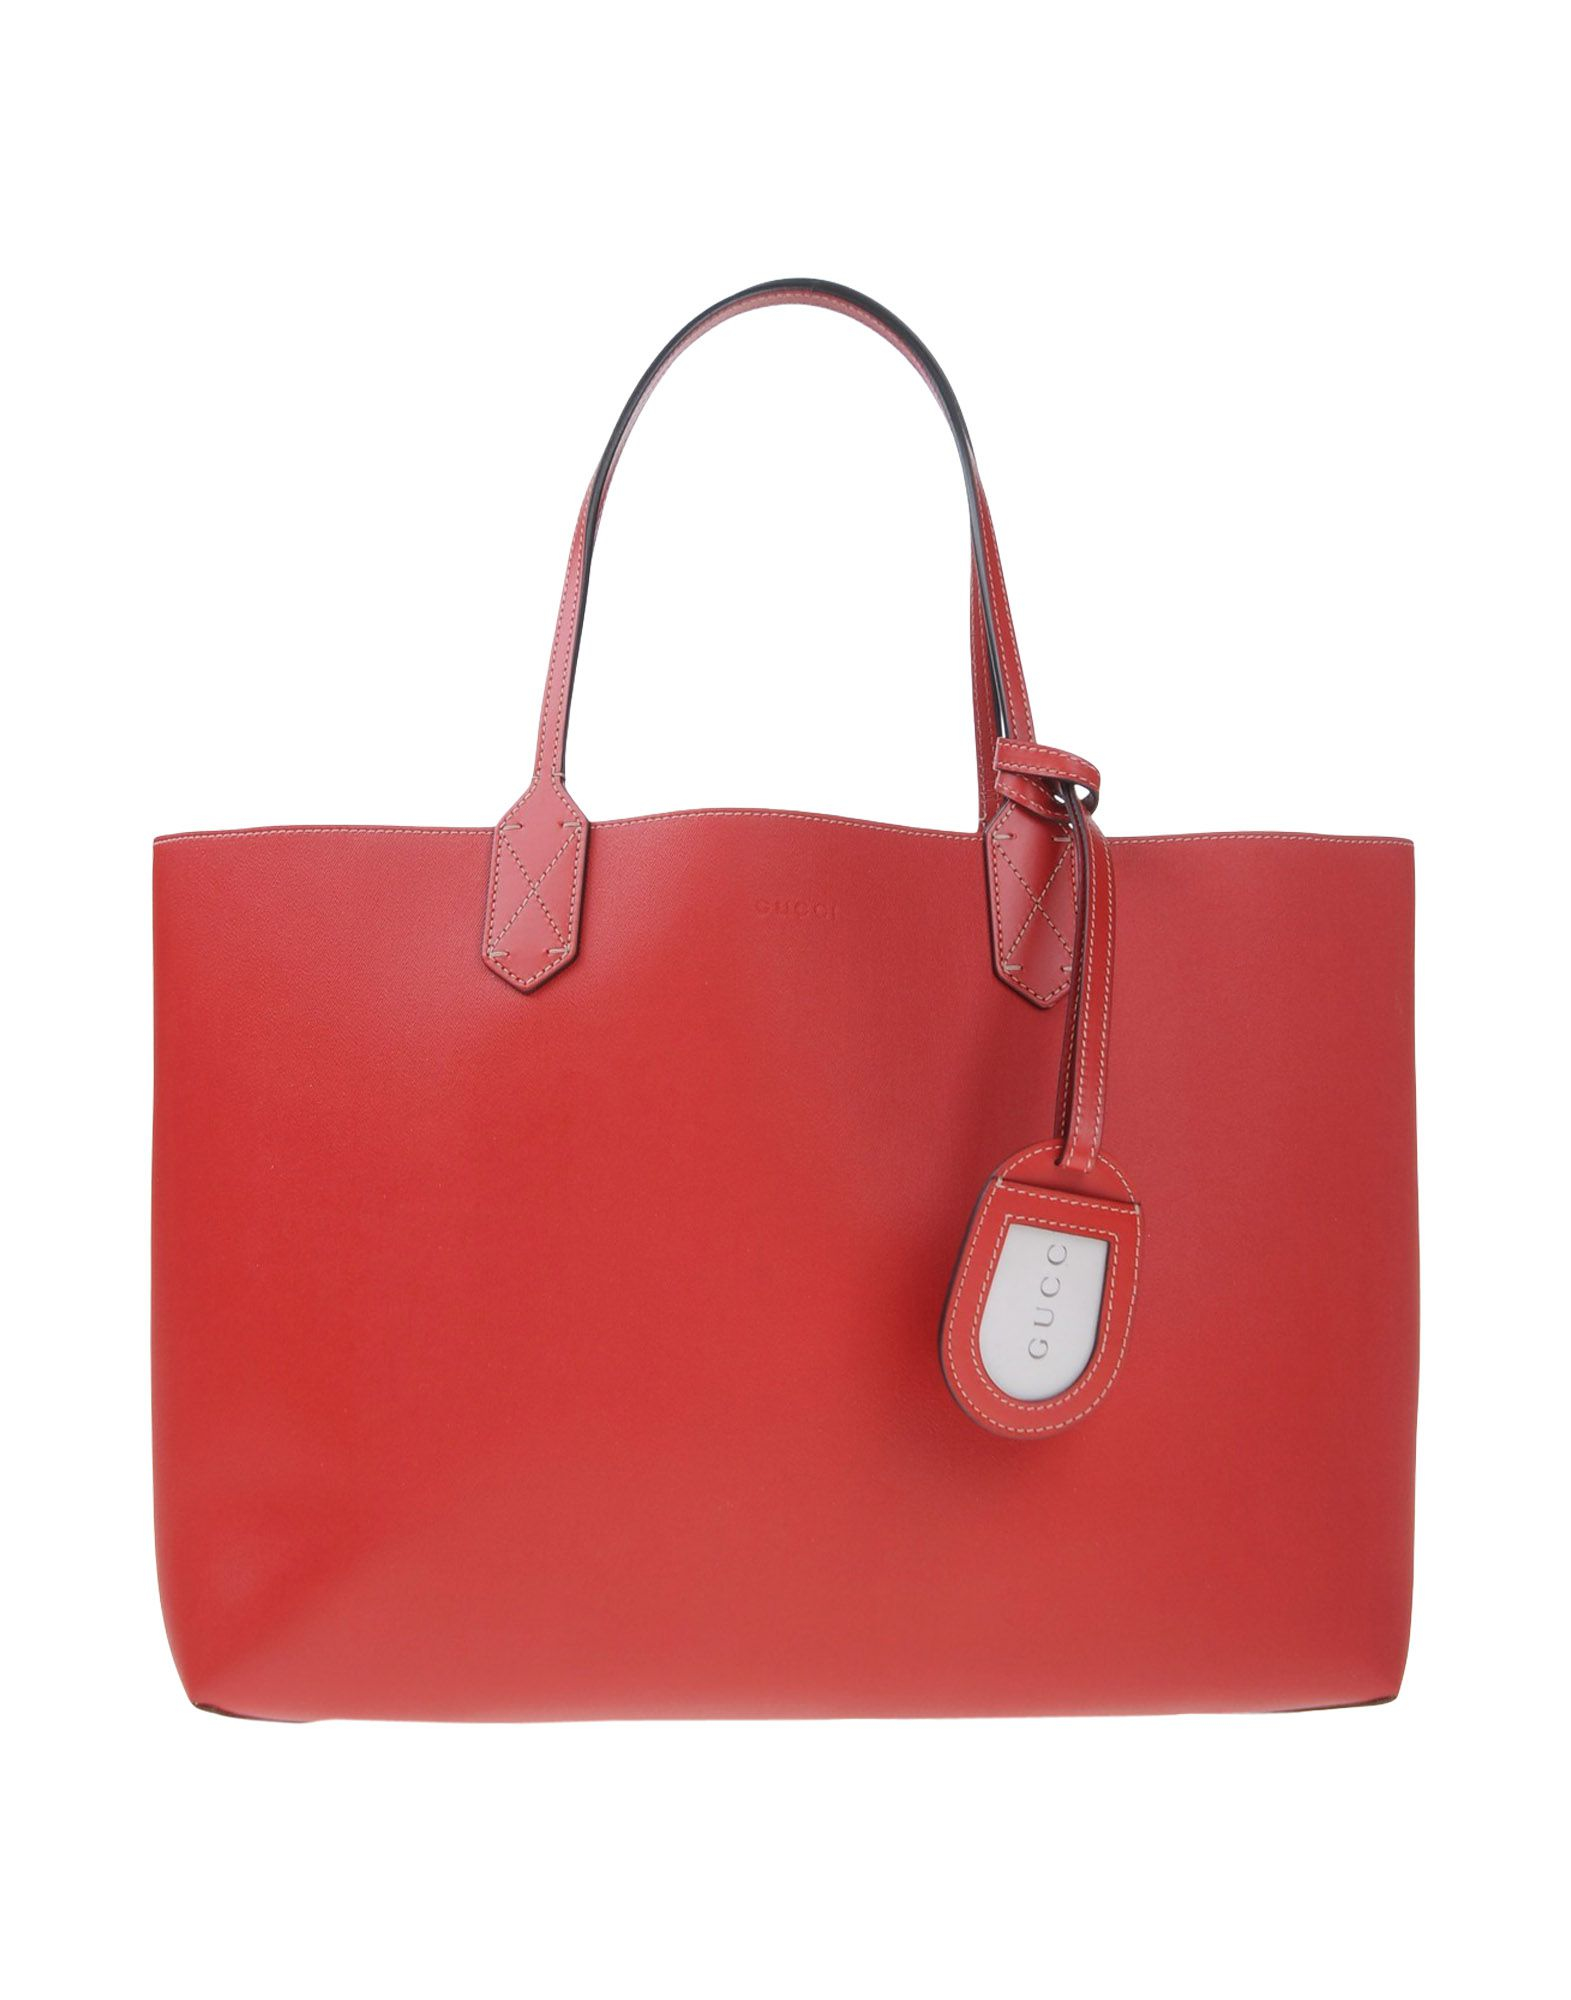 Gucci Handbag in Red - Lyst